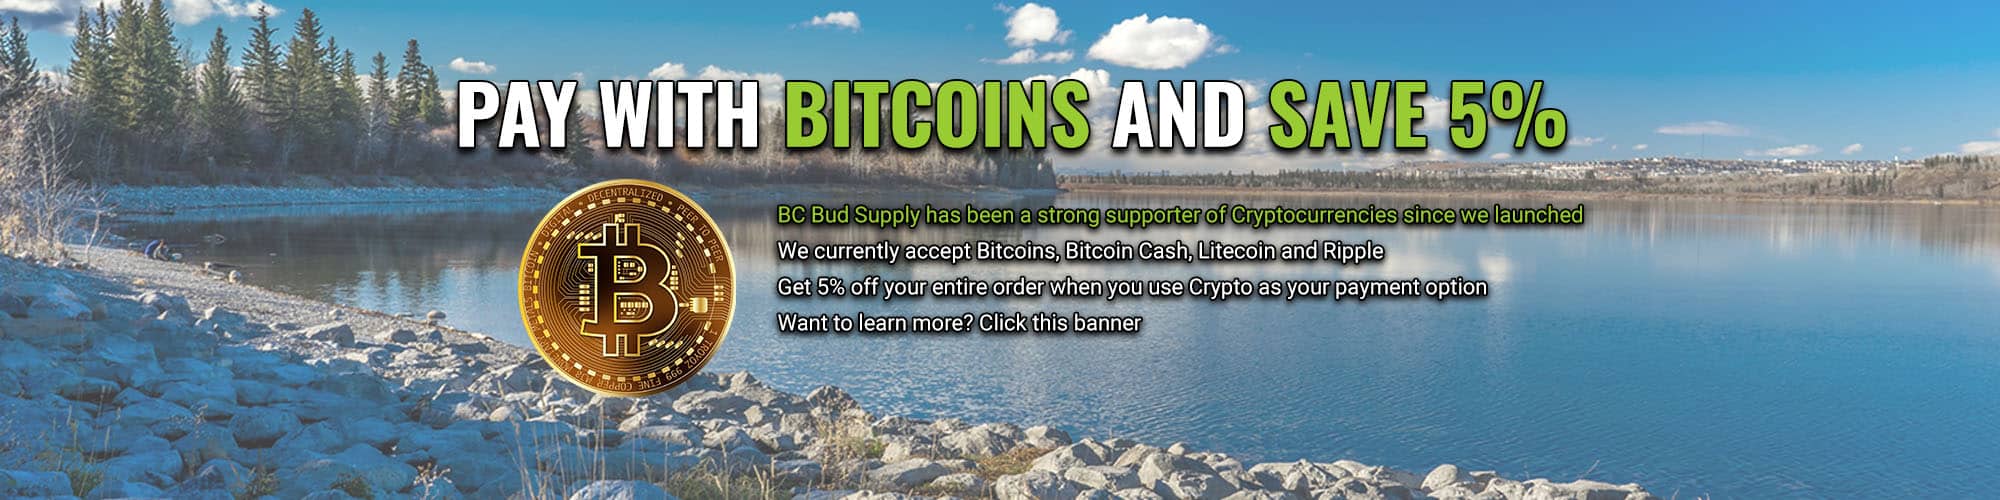 banner bitcoin desktop 3